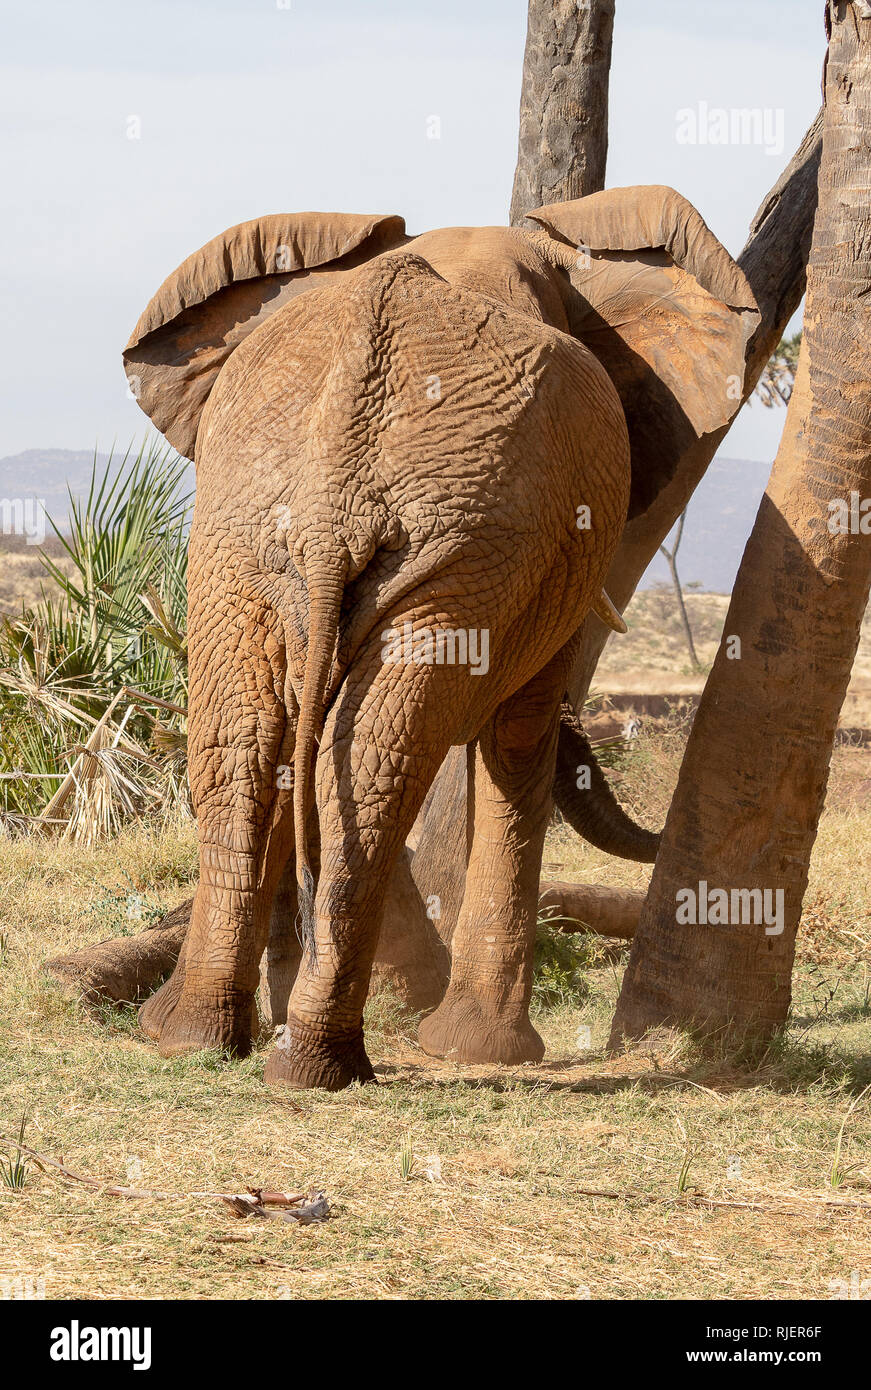 African elephants in Kenya, Africa Stock Photo